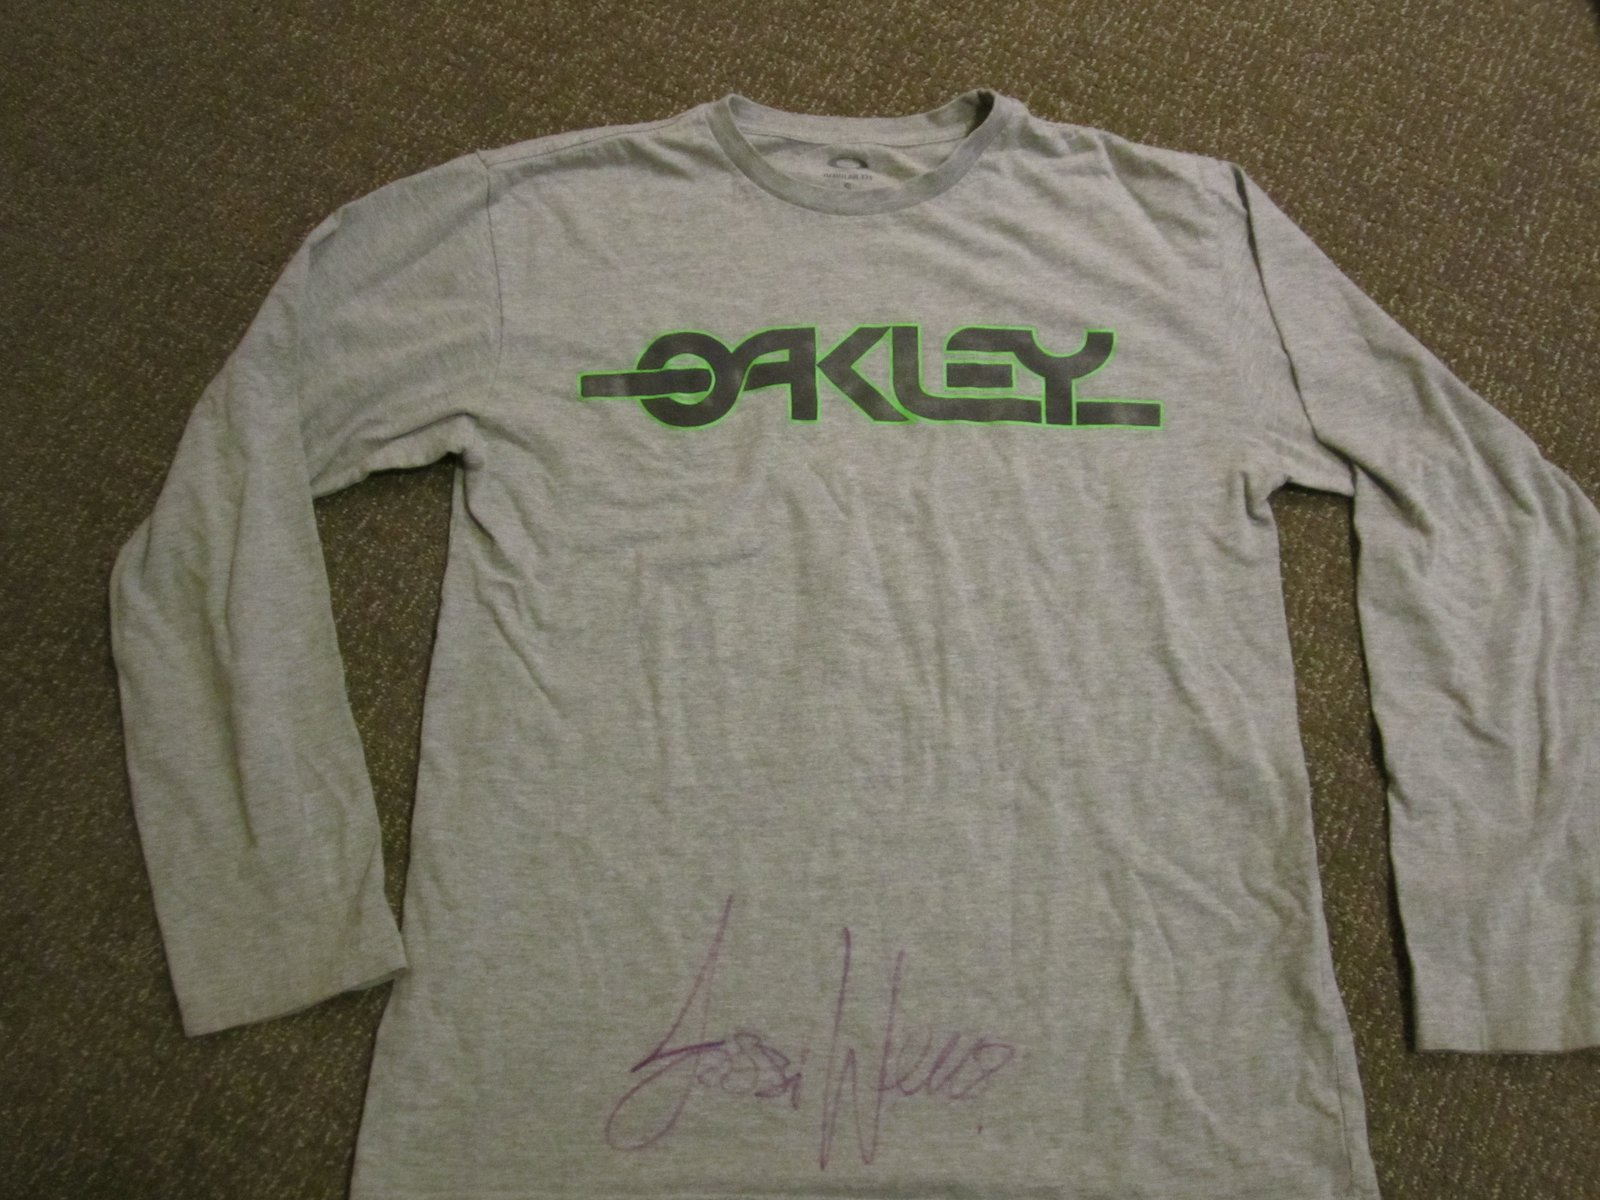 Oakley signed shirt